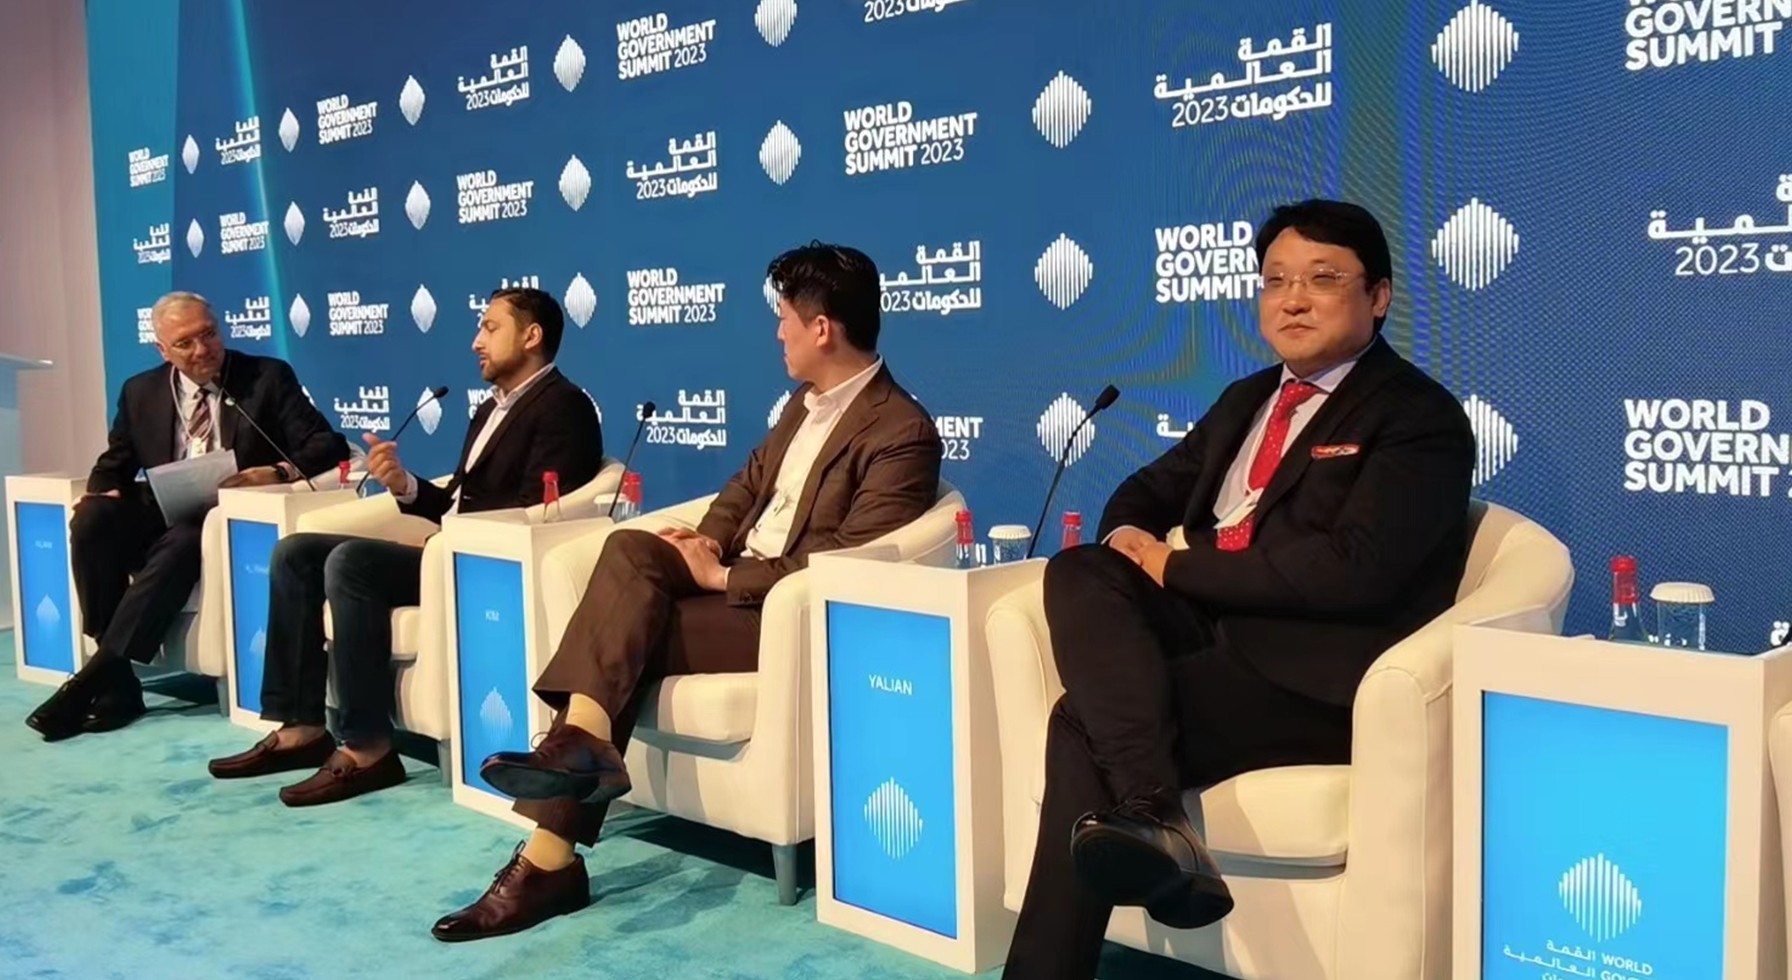 At the 2023 World Government Summit in Dubai, Cao Yalian, Chairman of Liulian Intelligence, attended on behalf of Chinese unicorn enterprises.